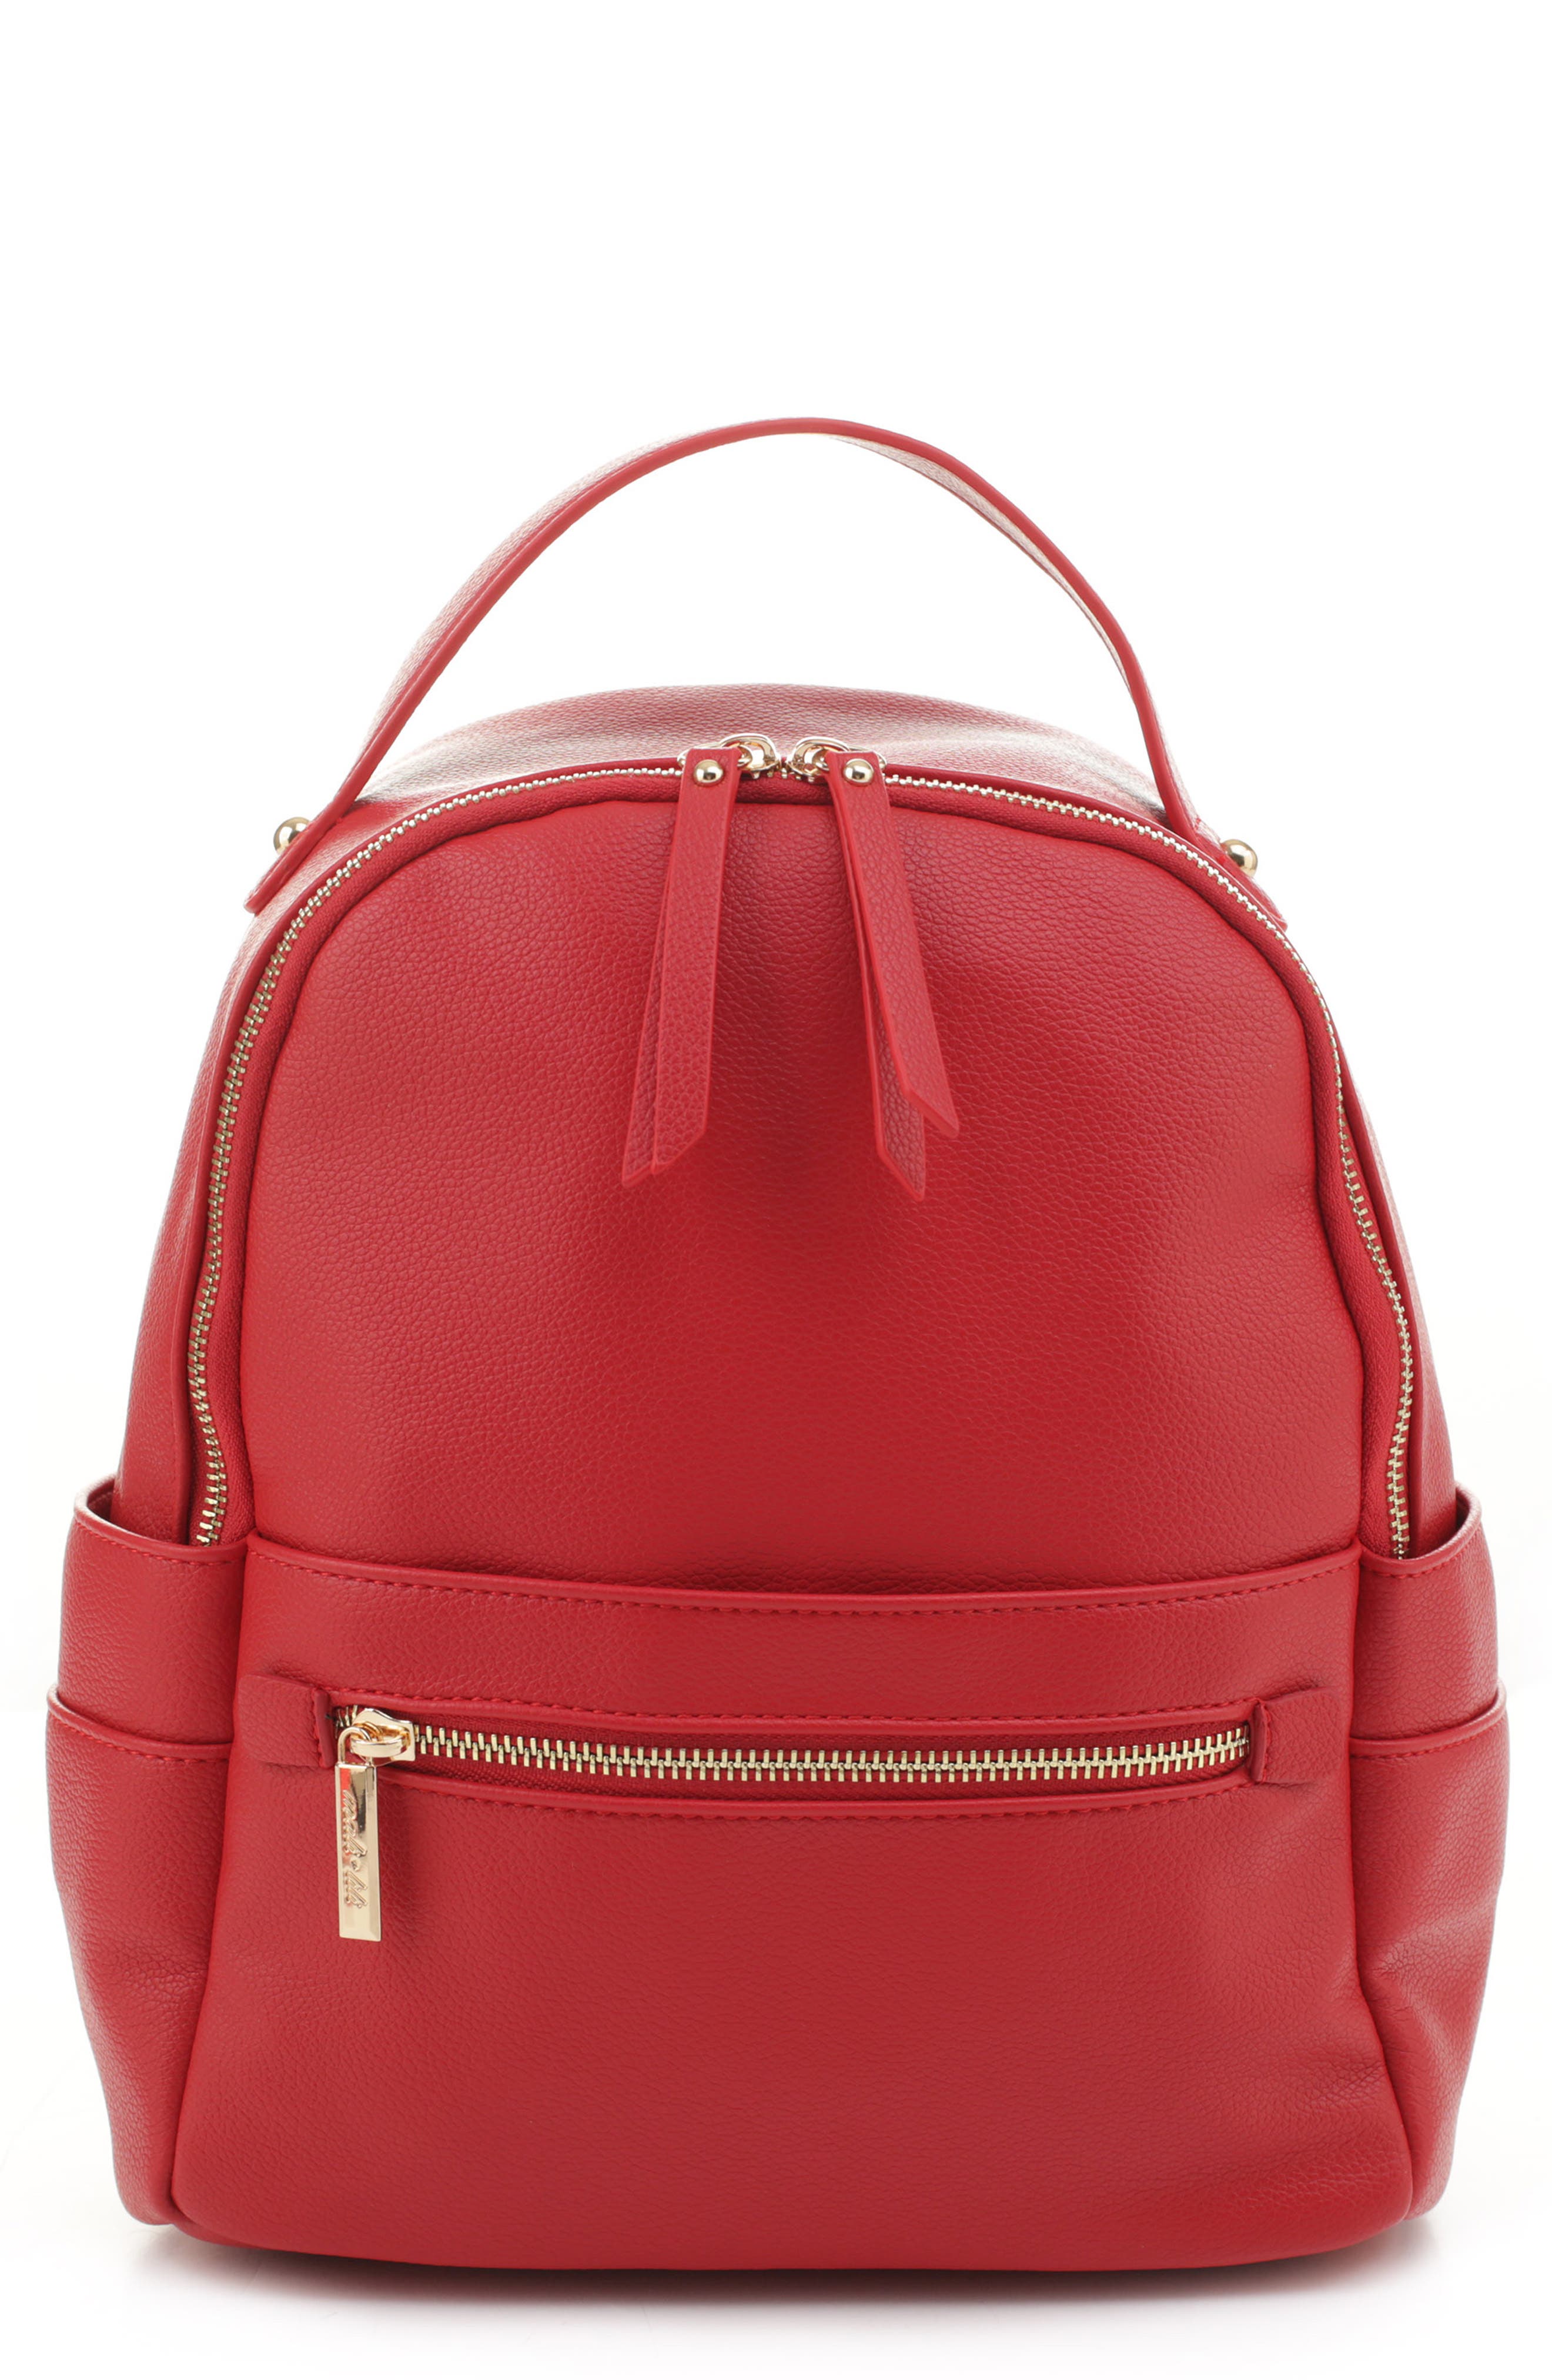 Melissa Wilde Famous Brand Rucksack Jacket Backpacks Fashion Personalized Leather Backpack Women Designer Girls School Bags 